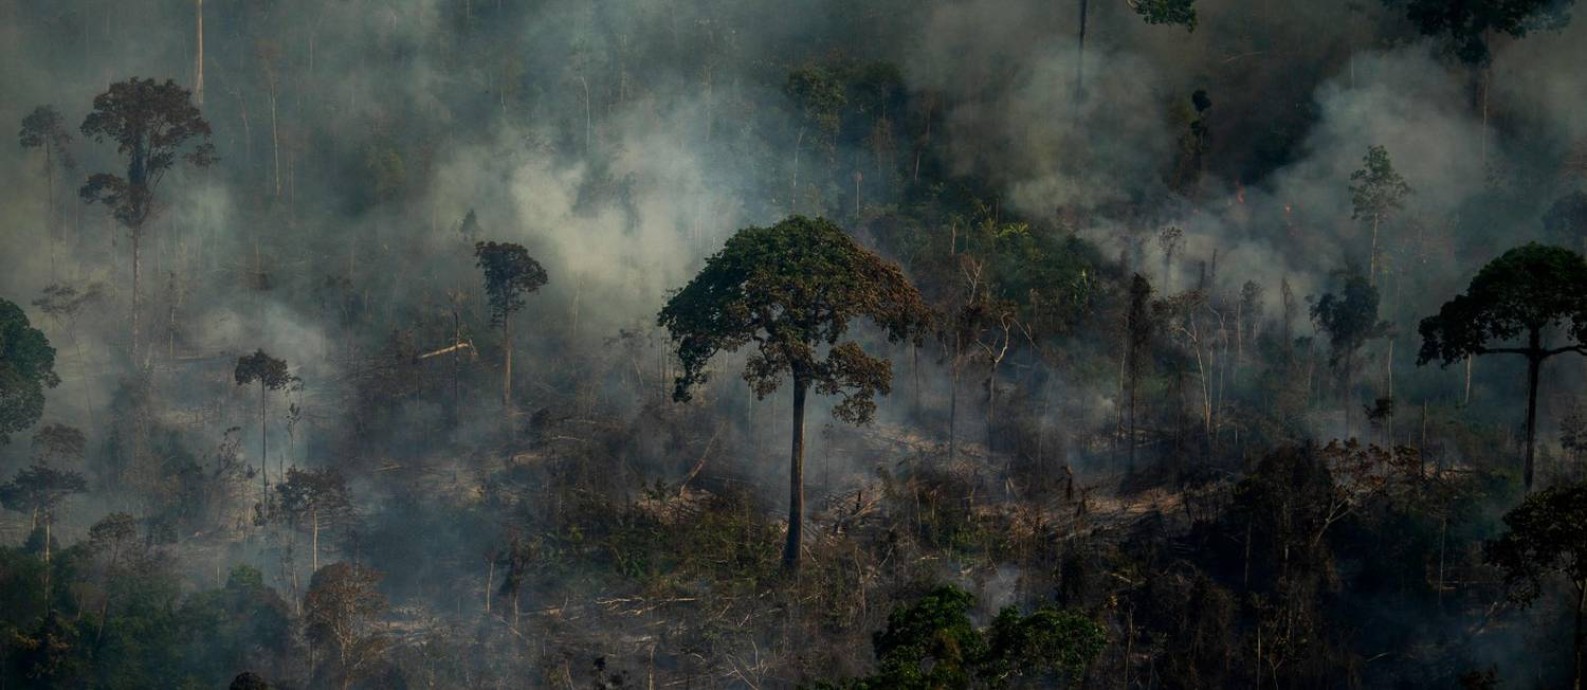 Foto aérea mostra incêndio ilegal em Labrea, no Amazonas Foto: MAURO PIMENTEL / AFP/15-9-21